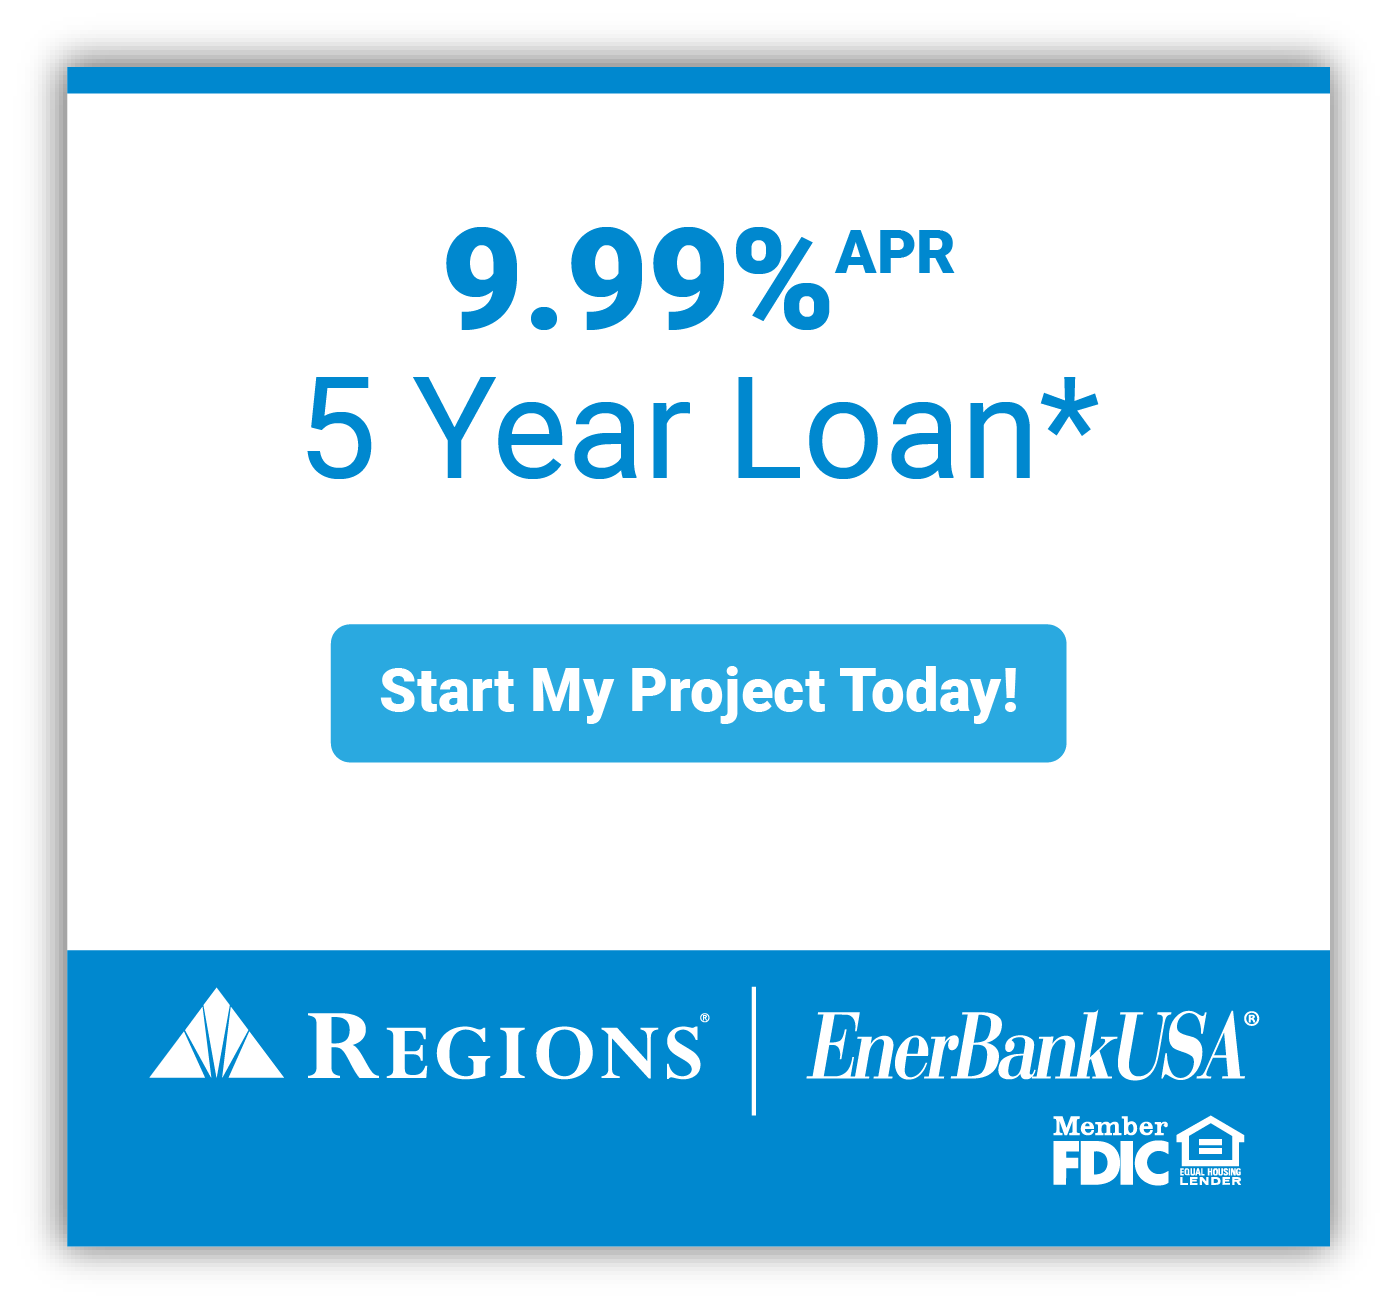 5 Year Loan Banner 9.99% APR